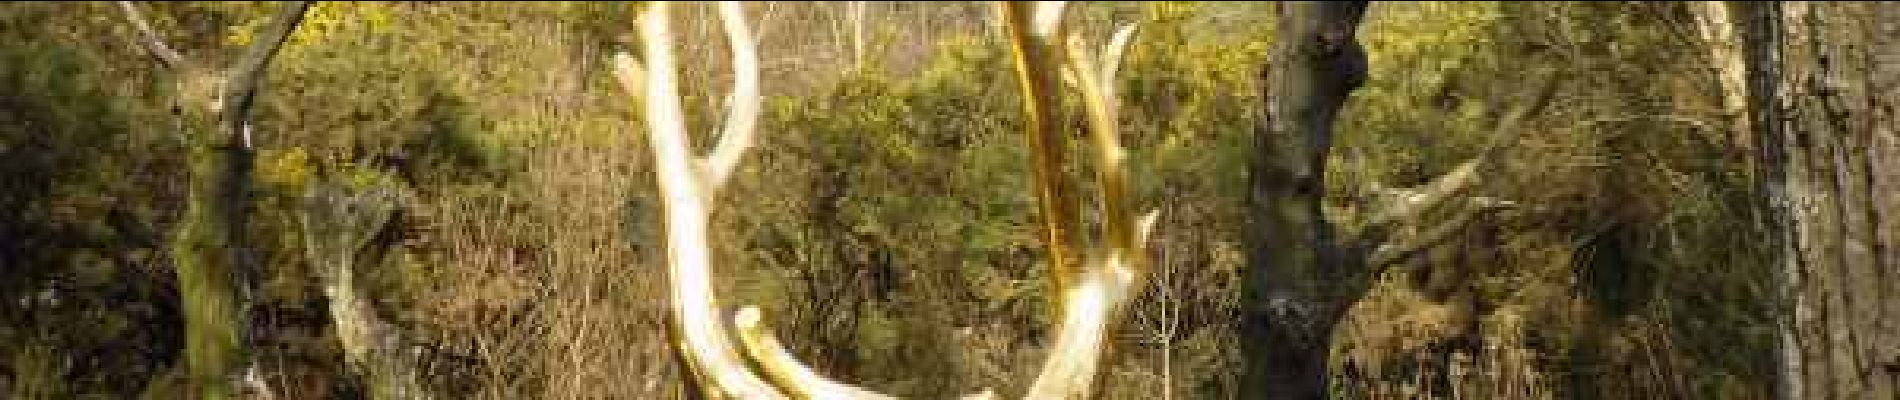 Punto di interesse Paimpont - L'arbre d'or - Photo